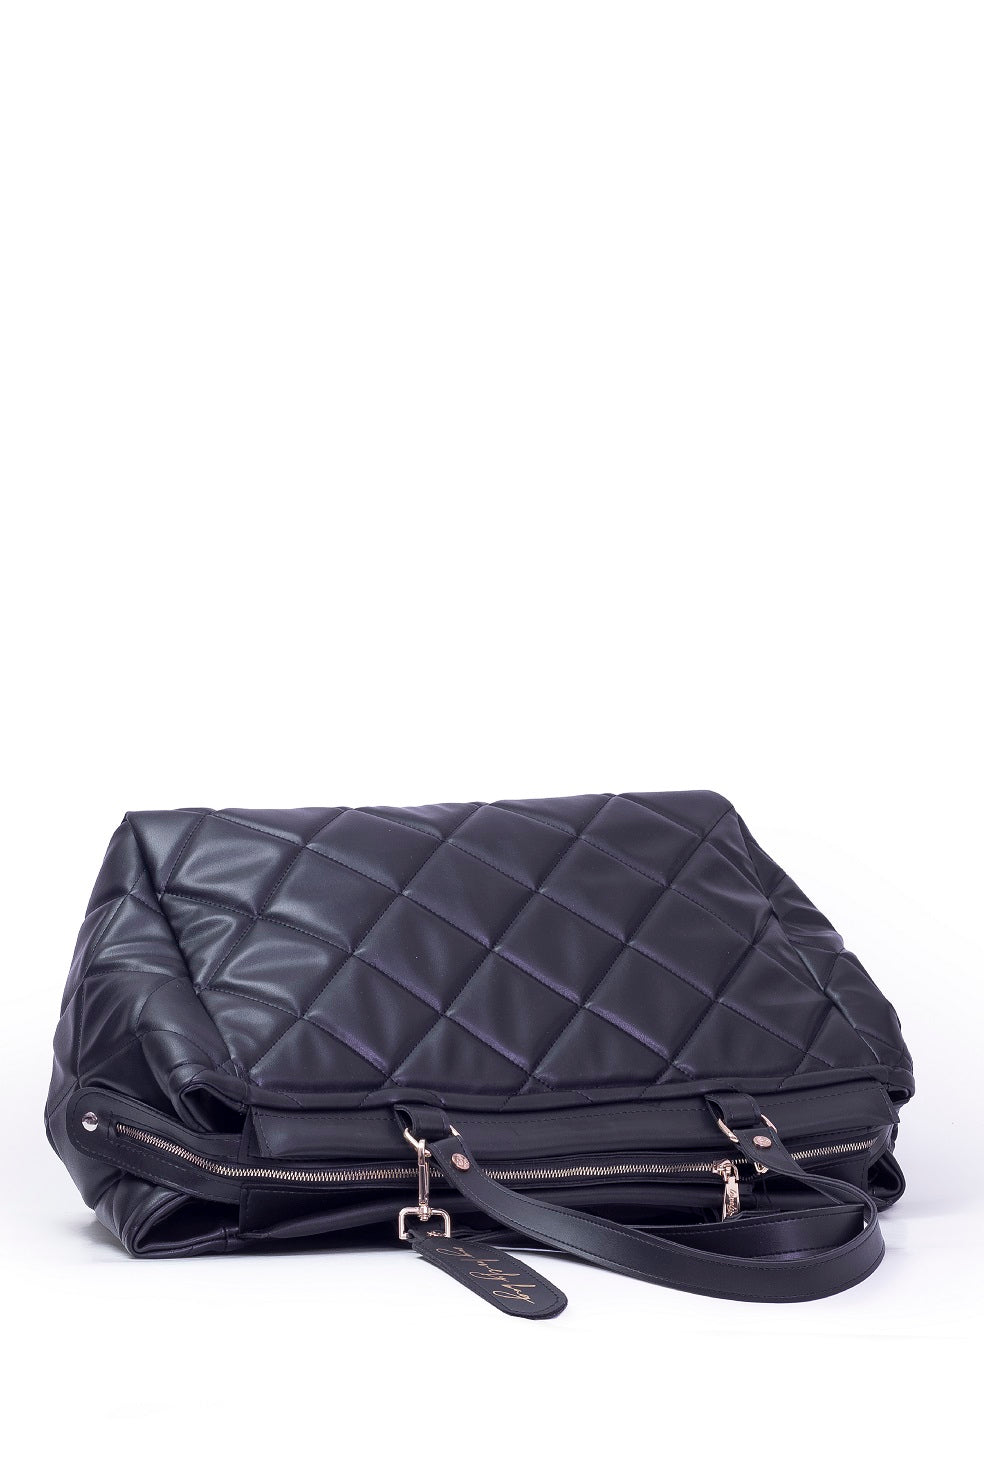 Luxury large handbag for weekend and trip - BAG - LOLA - BLACK GOLD